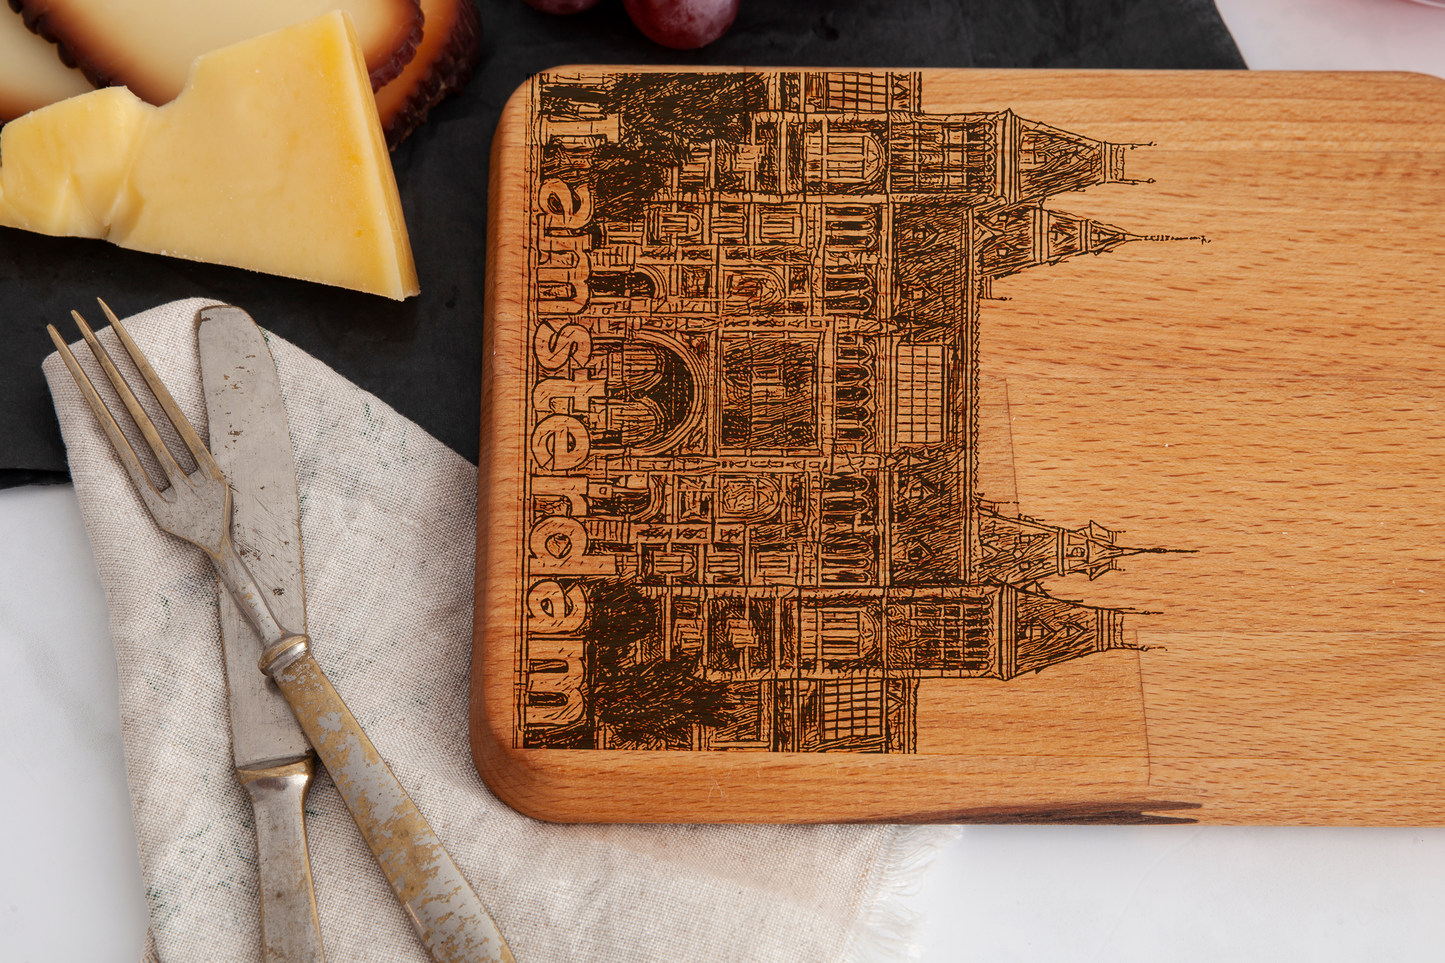 Amsterdam, Museumplein, cheese board, wood grain